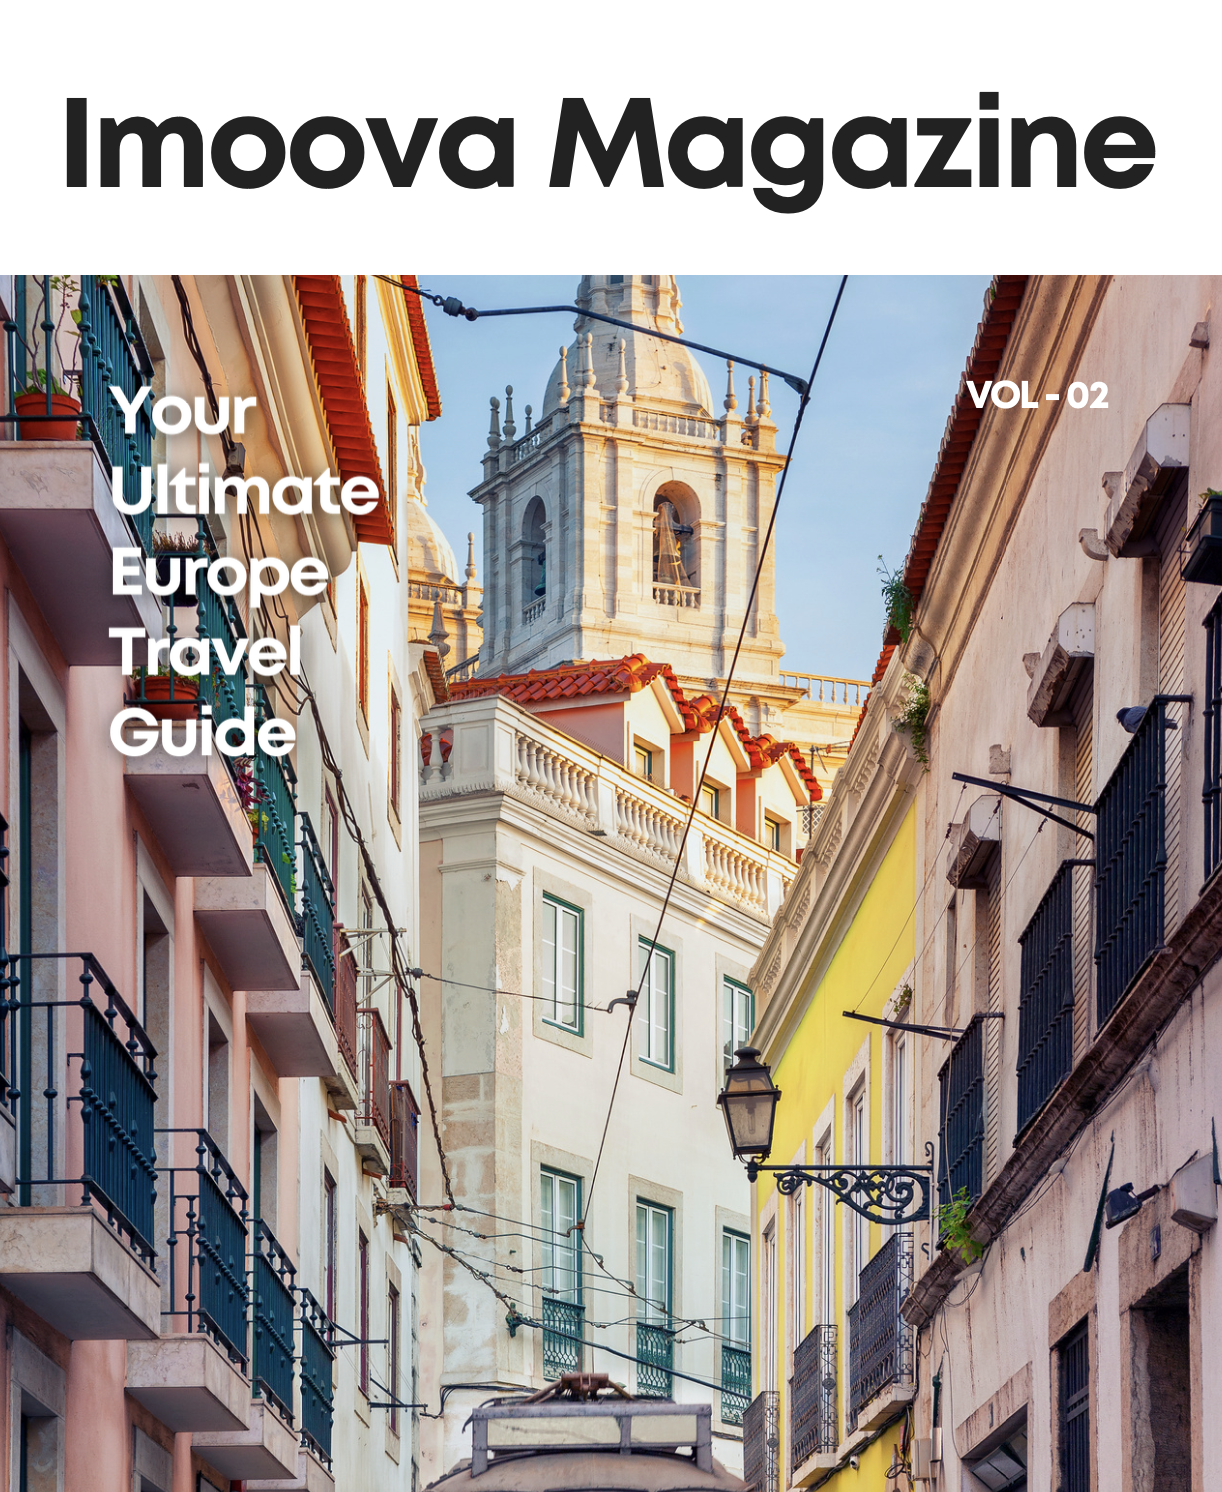 Magazine Issue 3 - Discover Lisbon